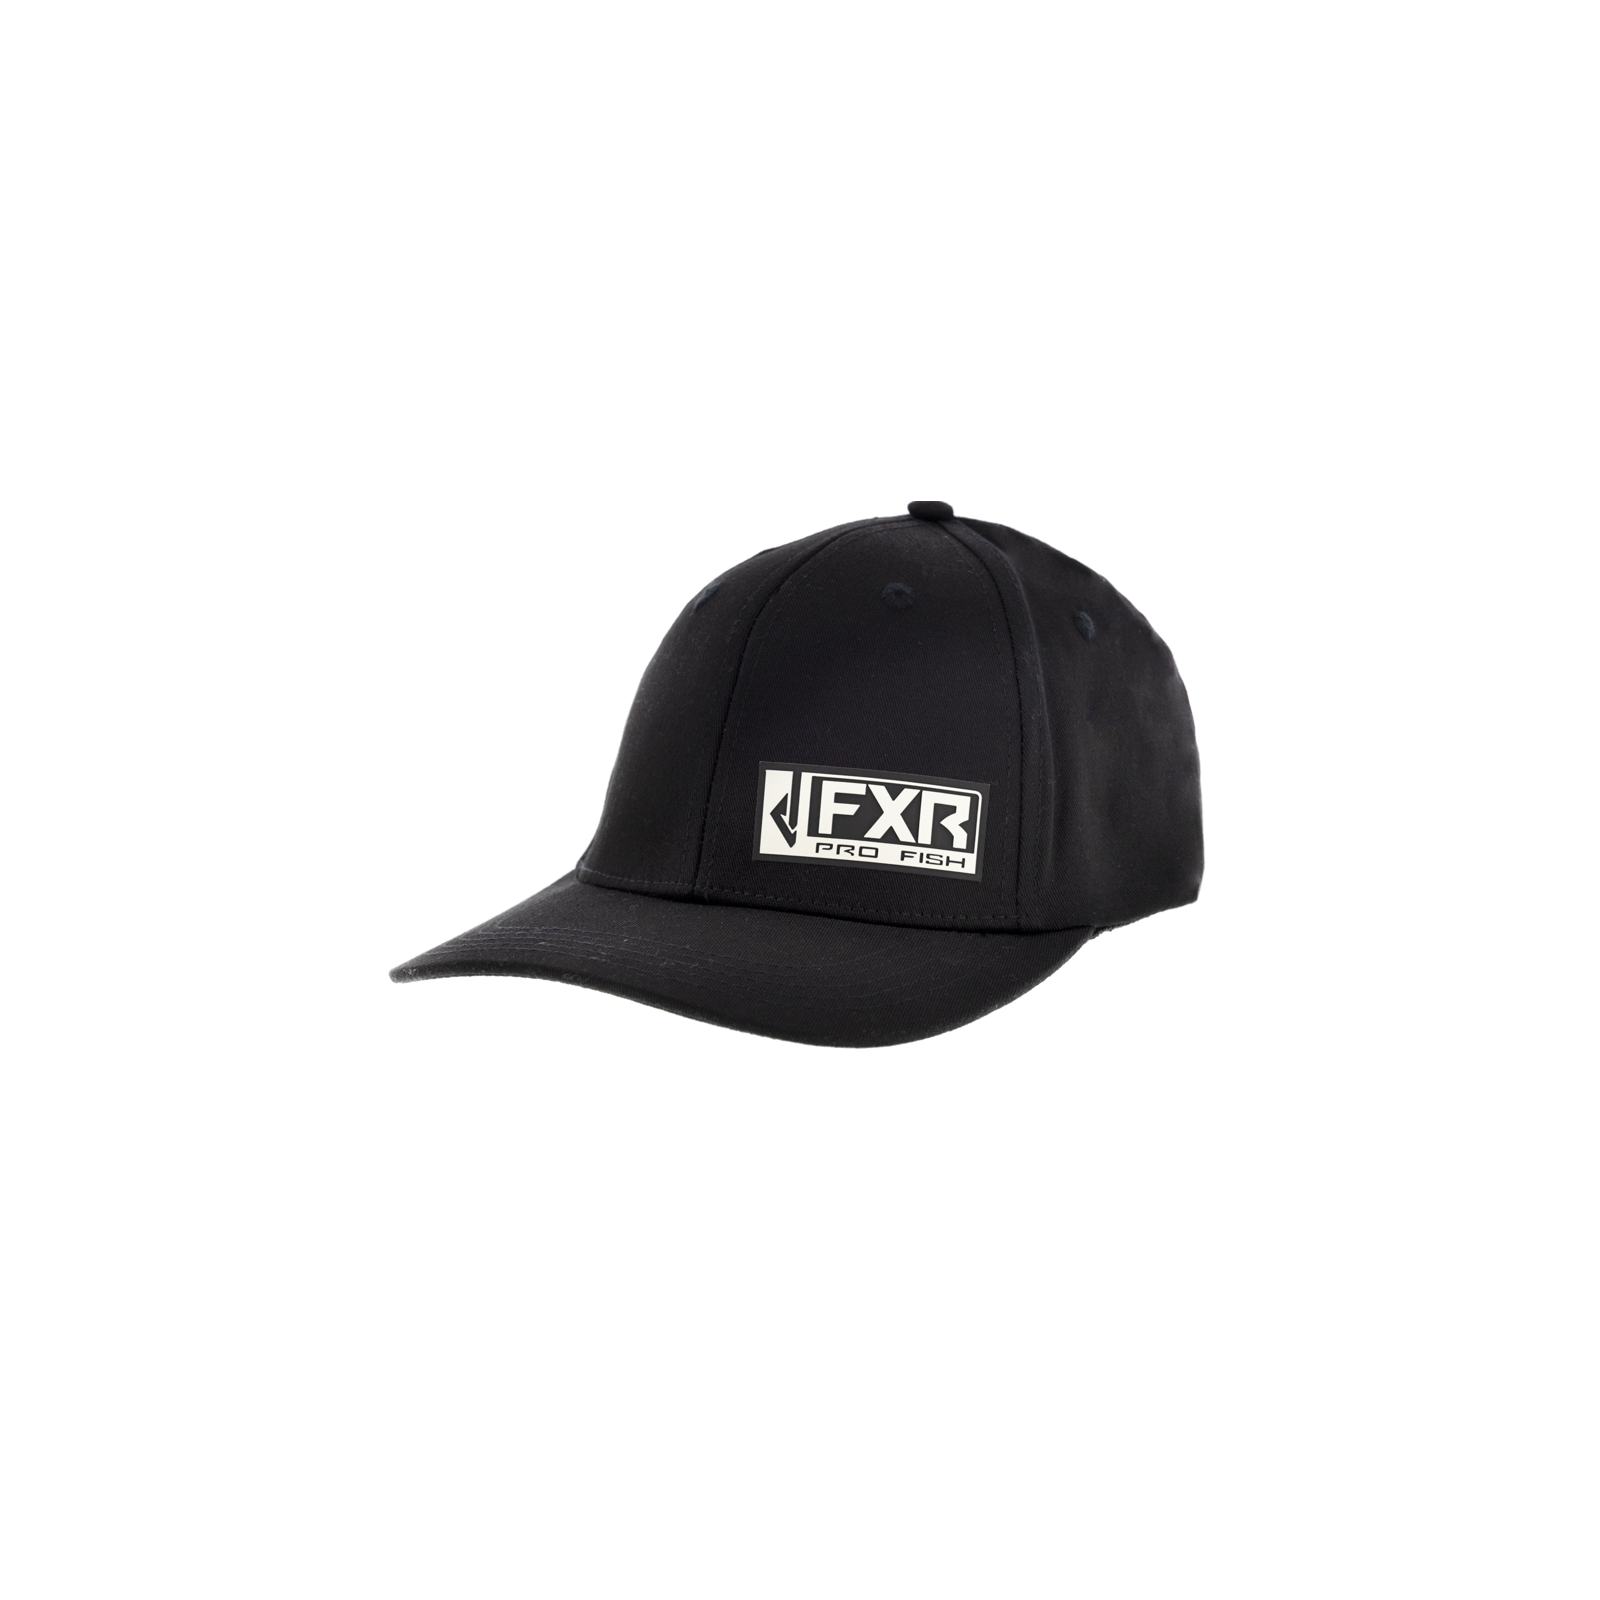 FXR Cast Hat